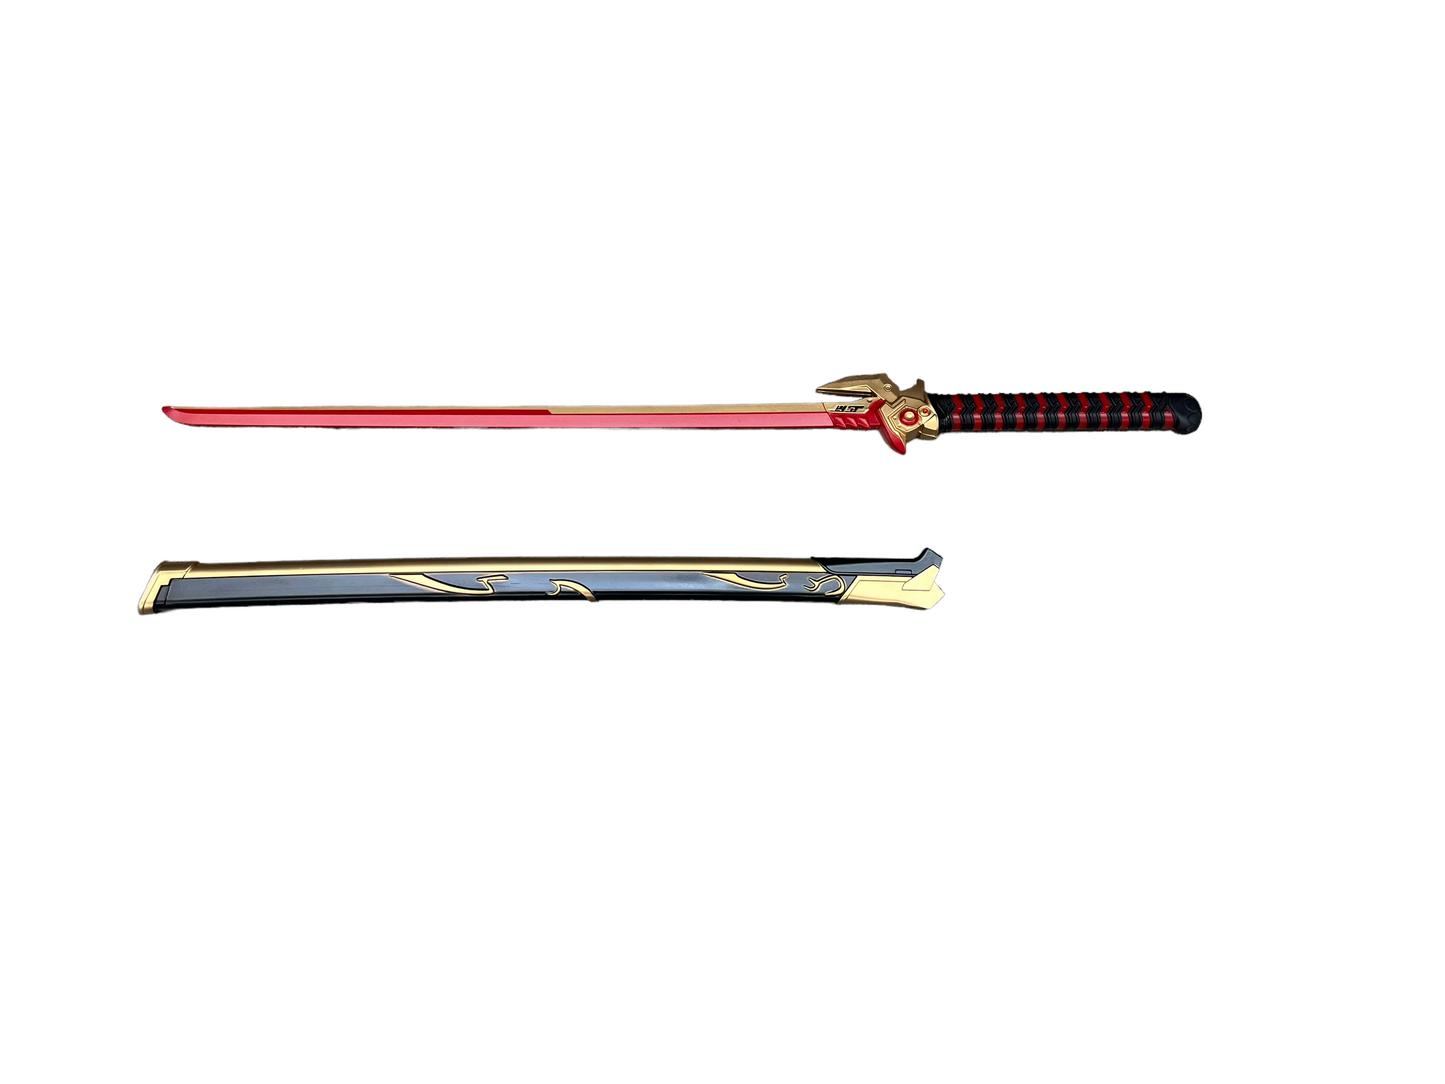 Genji Foam Sword with Scabbard